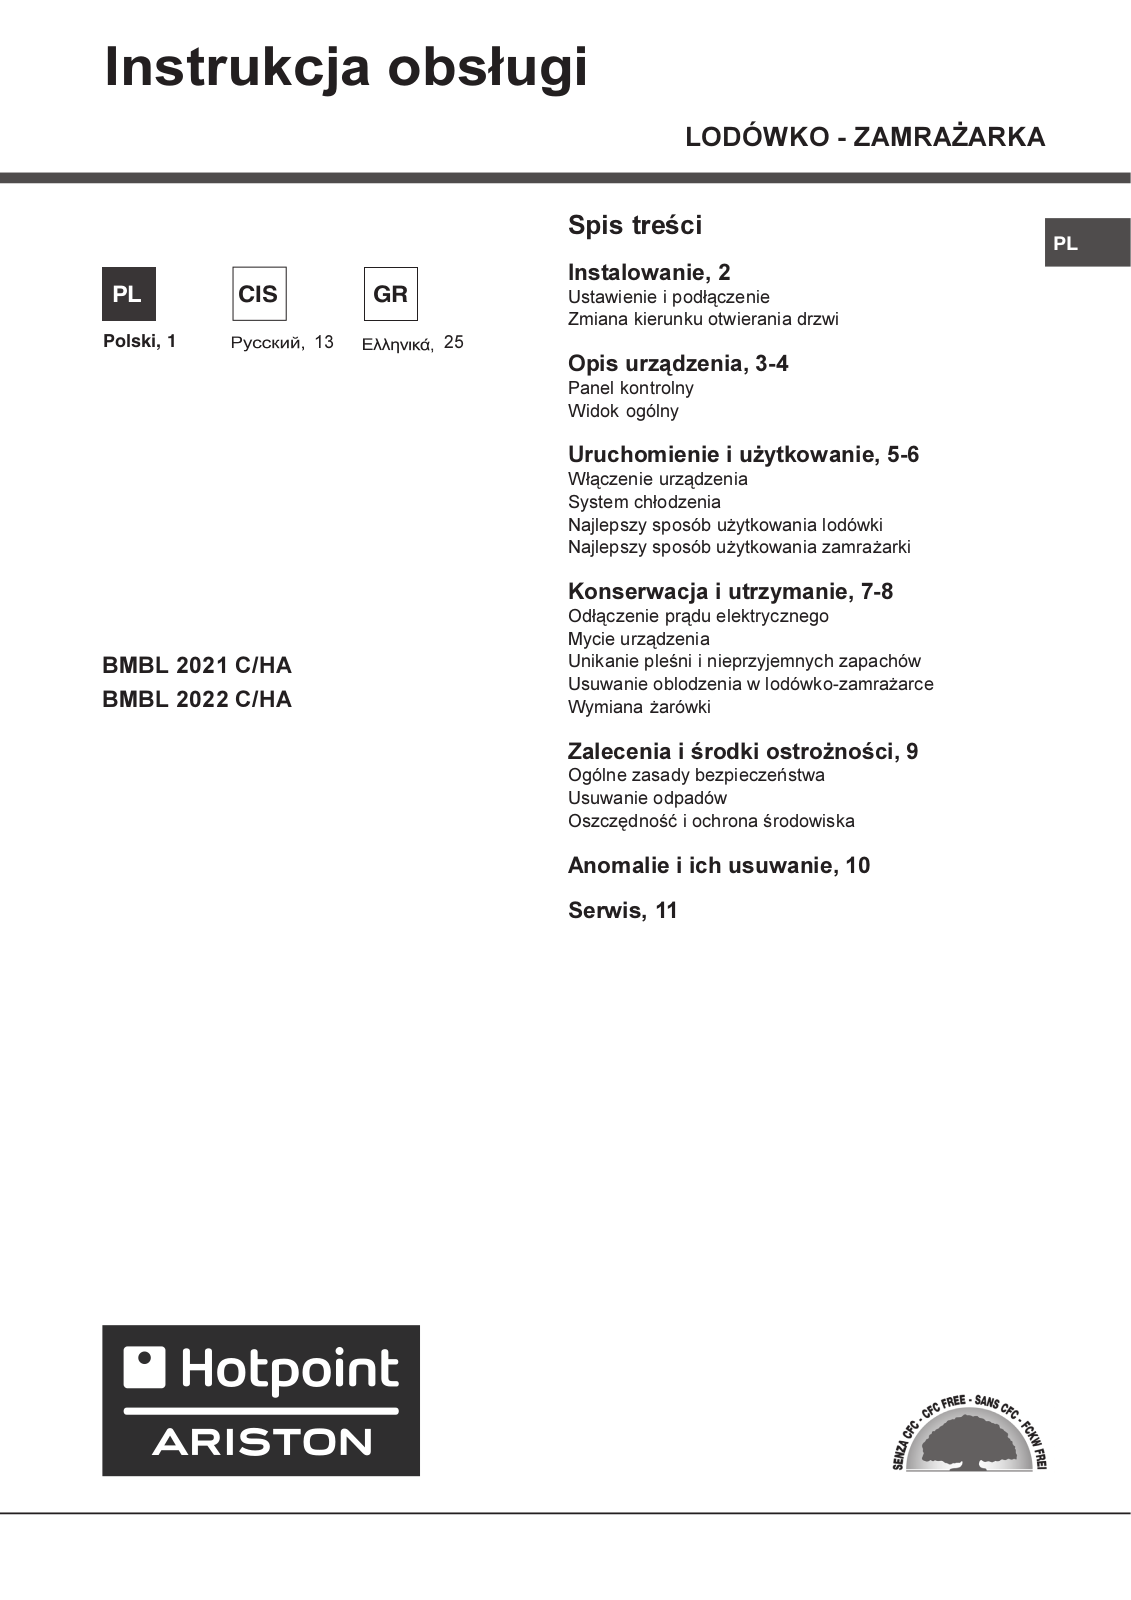 Hotpoint-ariston BMBL 2021 C HA User Manual